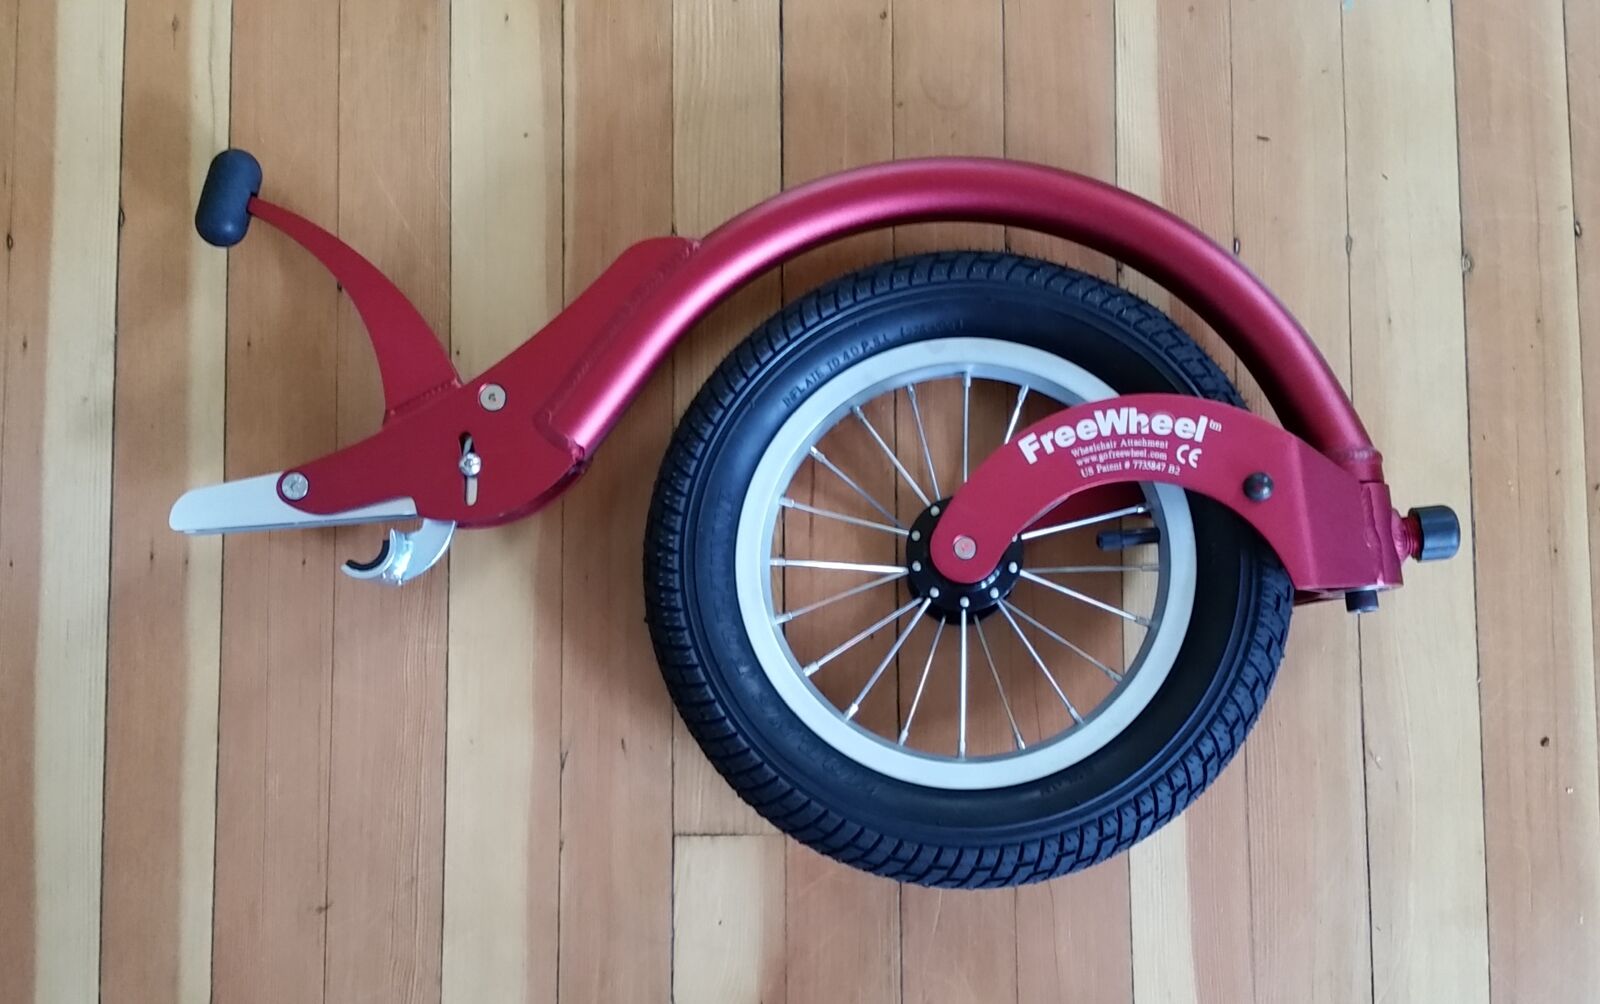 Freewheel | Mobilitec